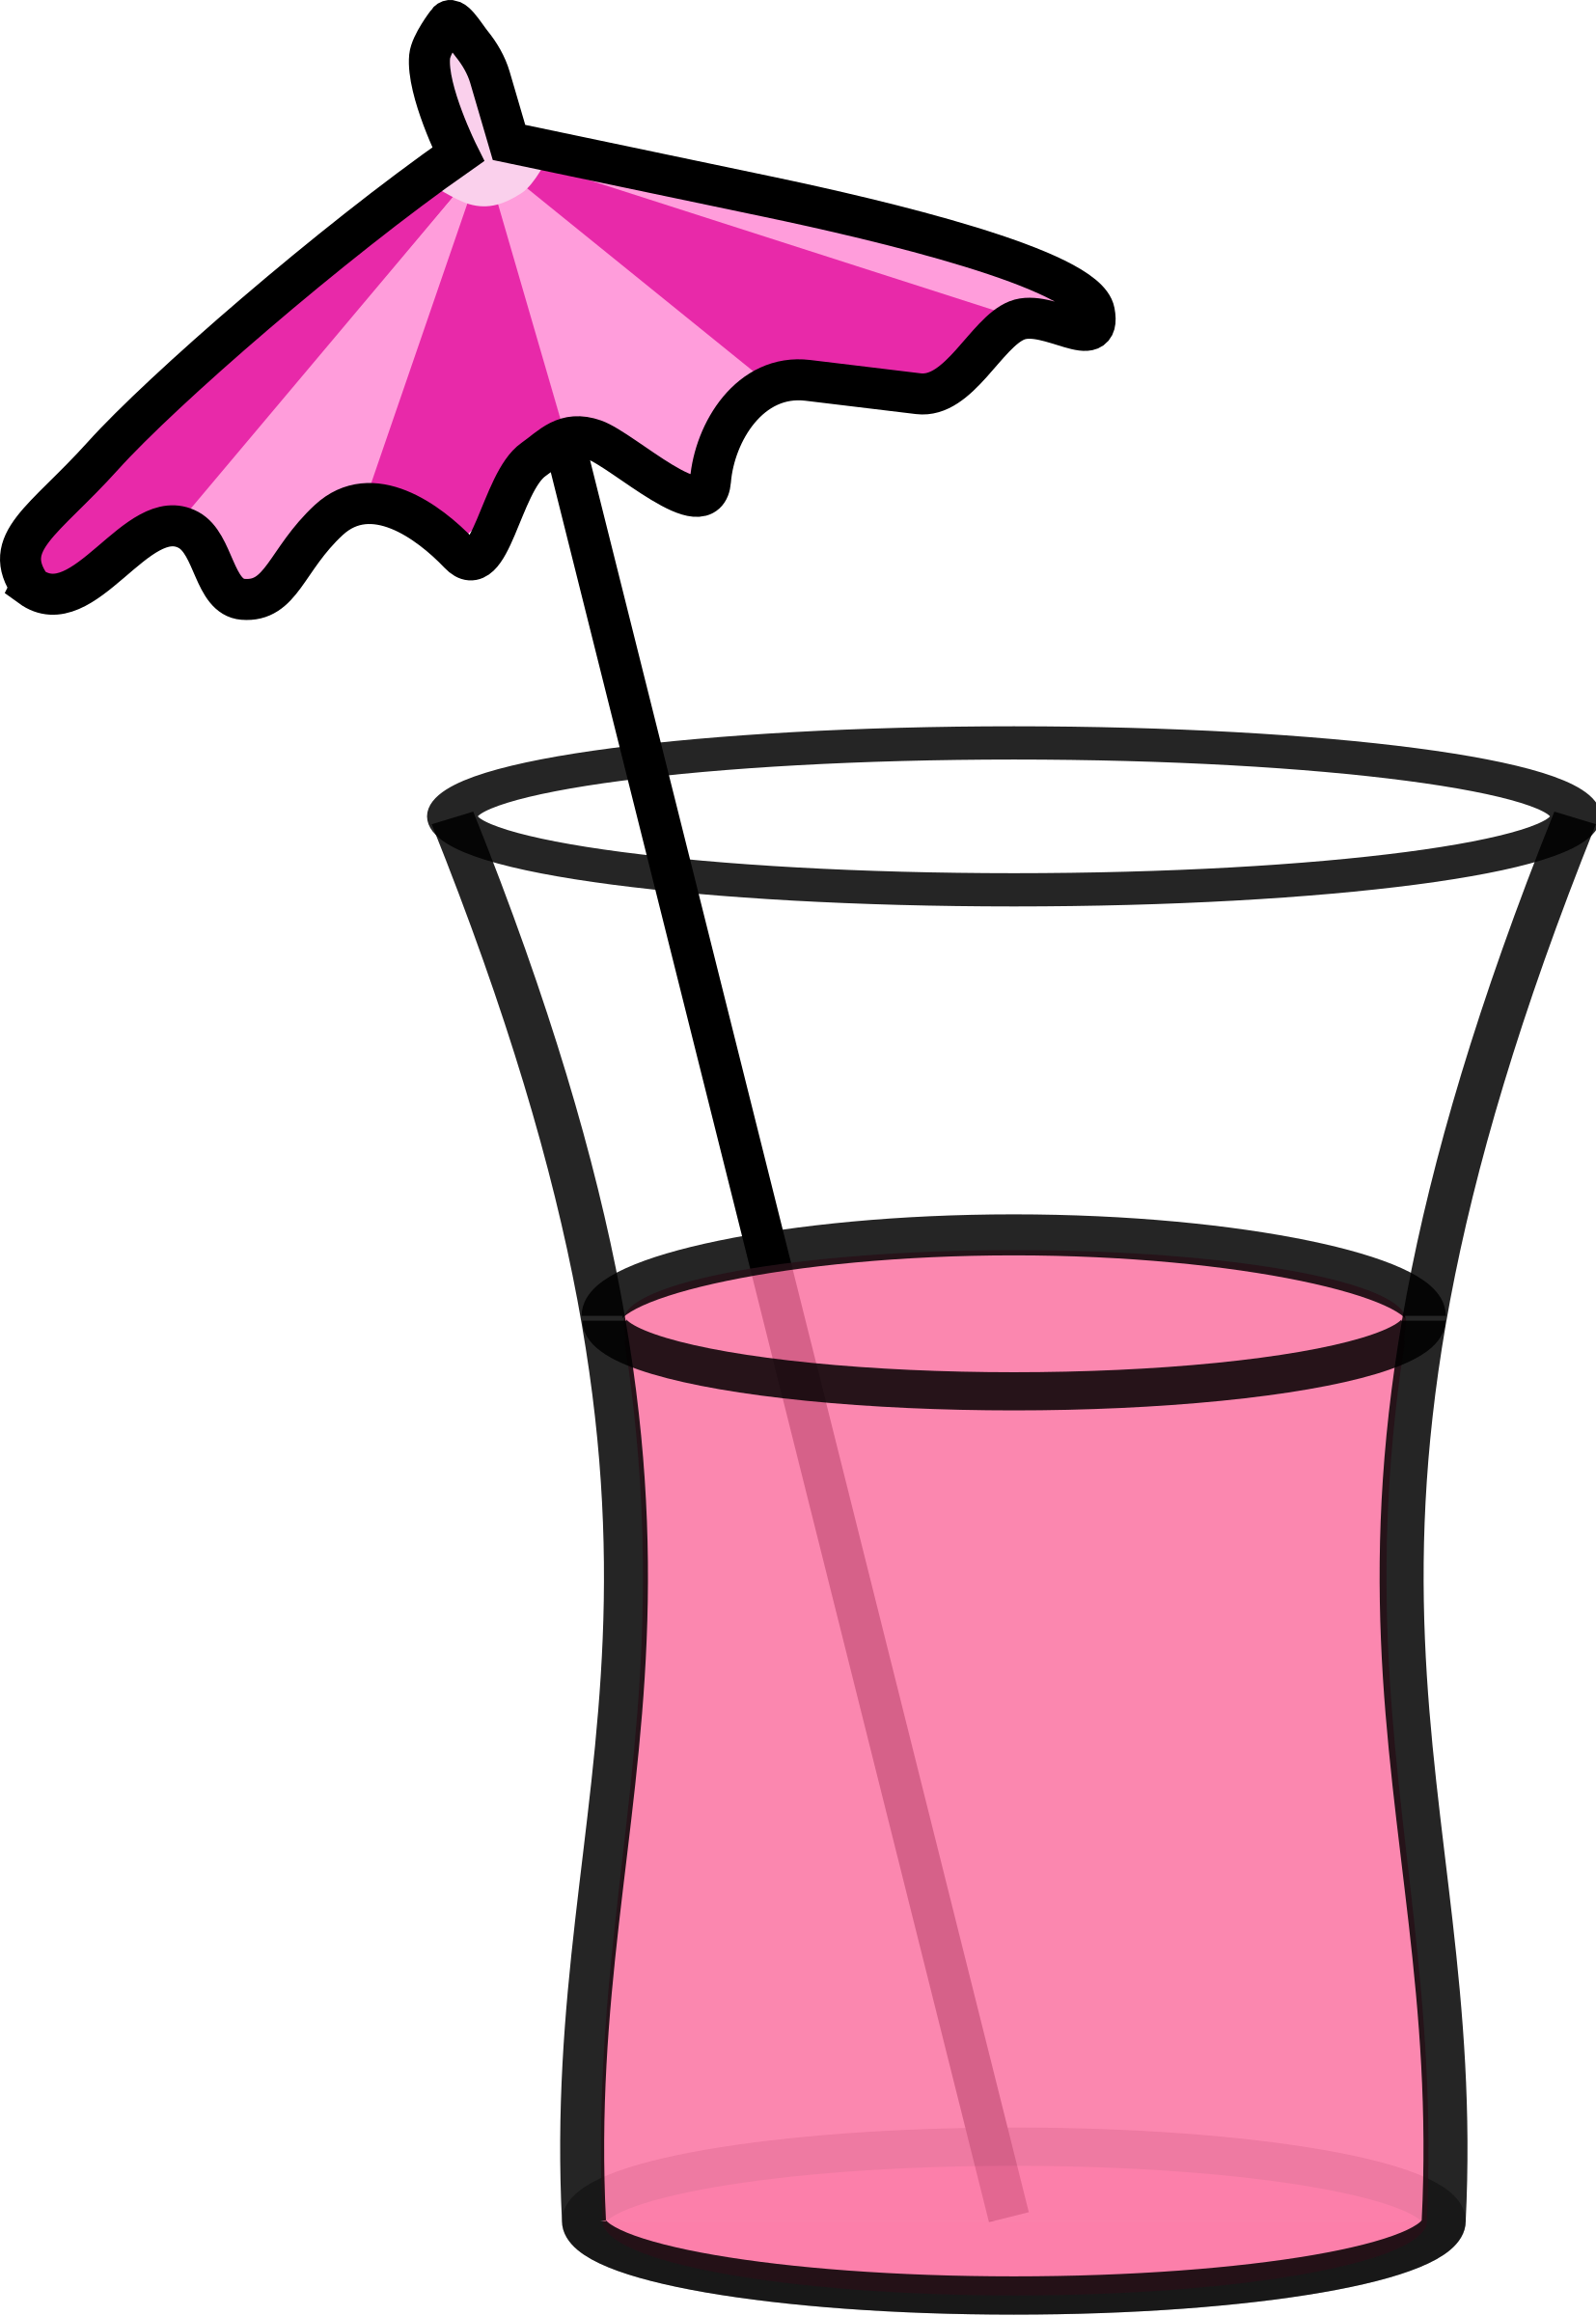 Umbrella Drink drawing free image.